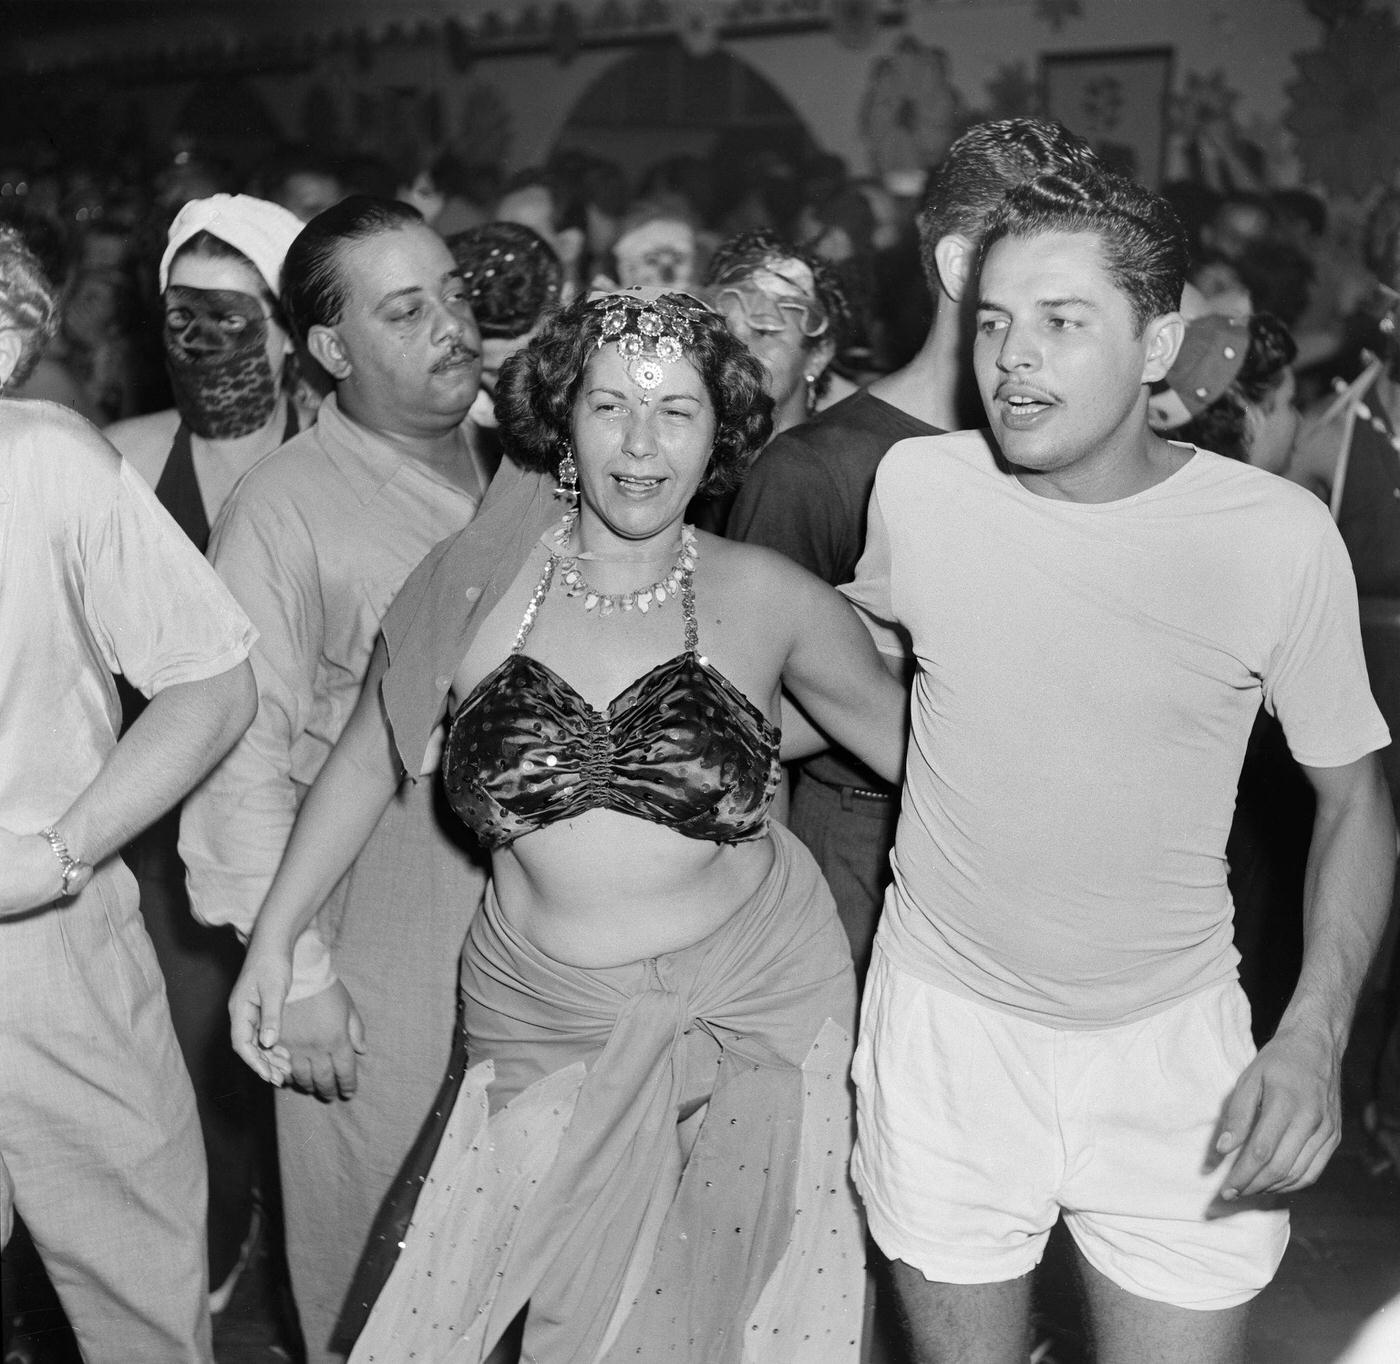 Dancing in Carnival Costumes, Rio 1953